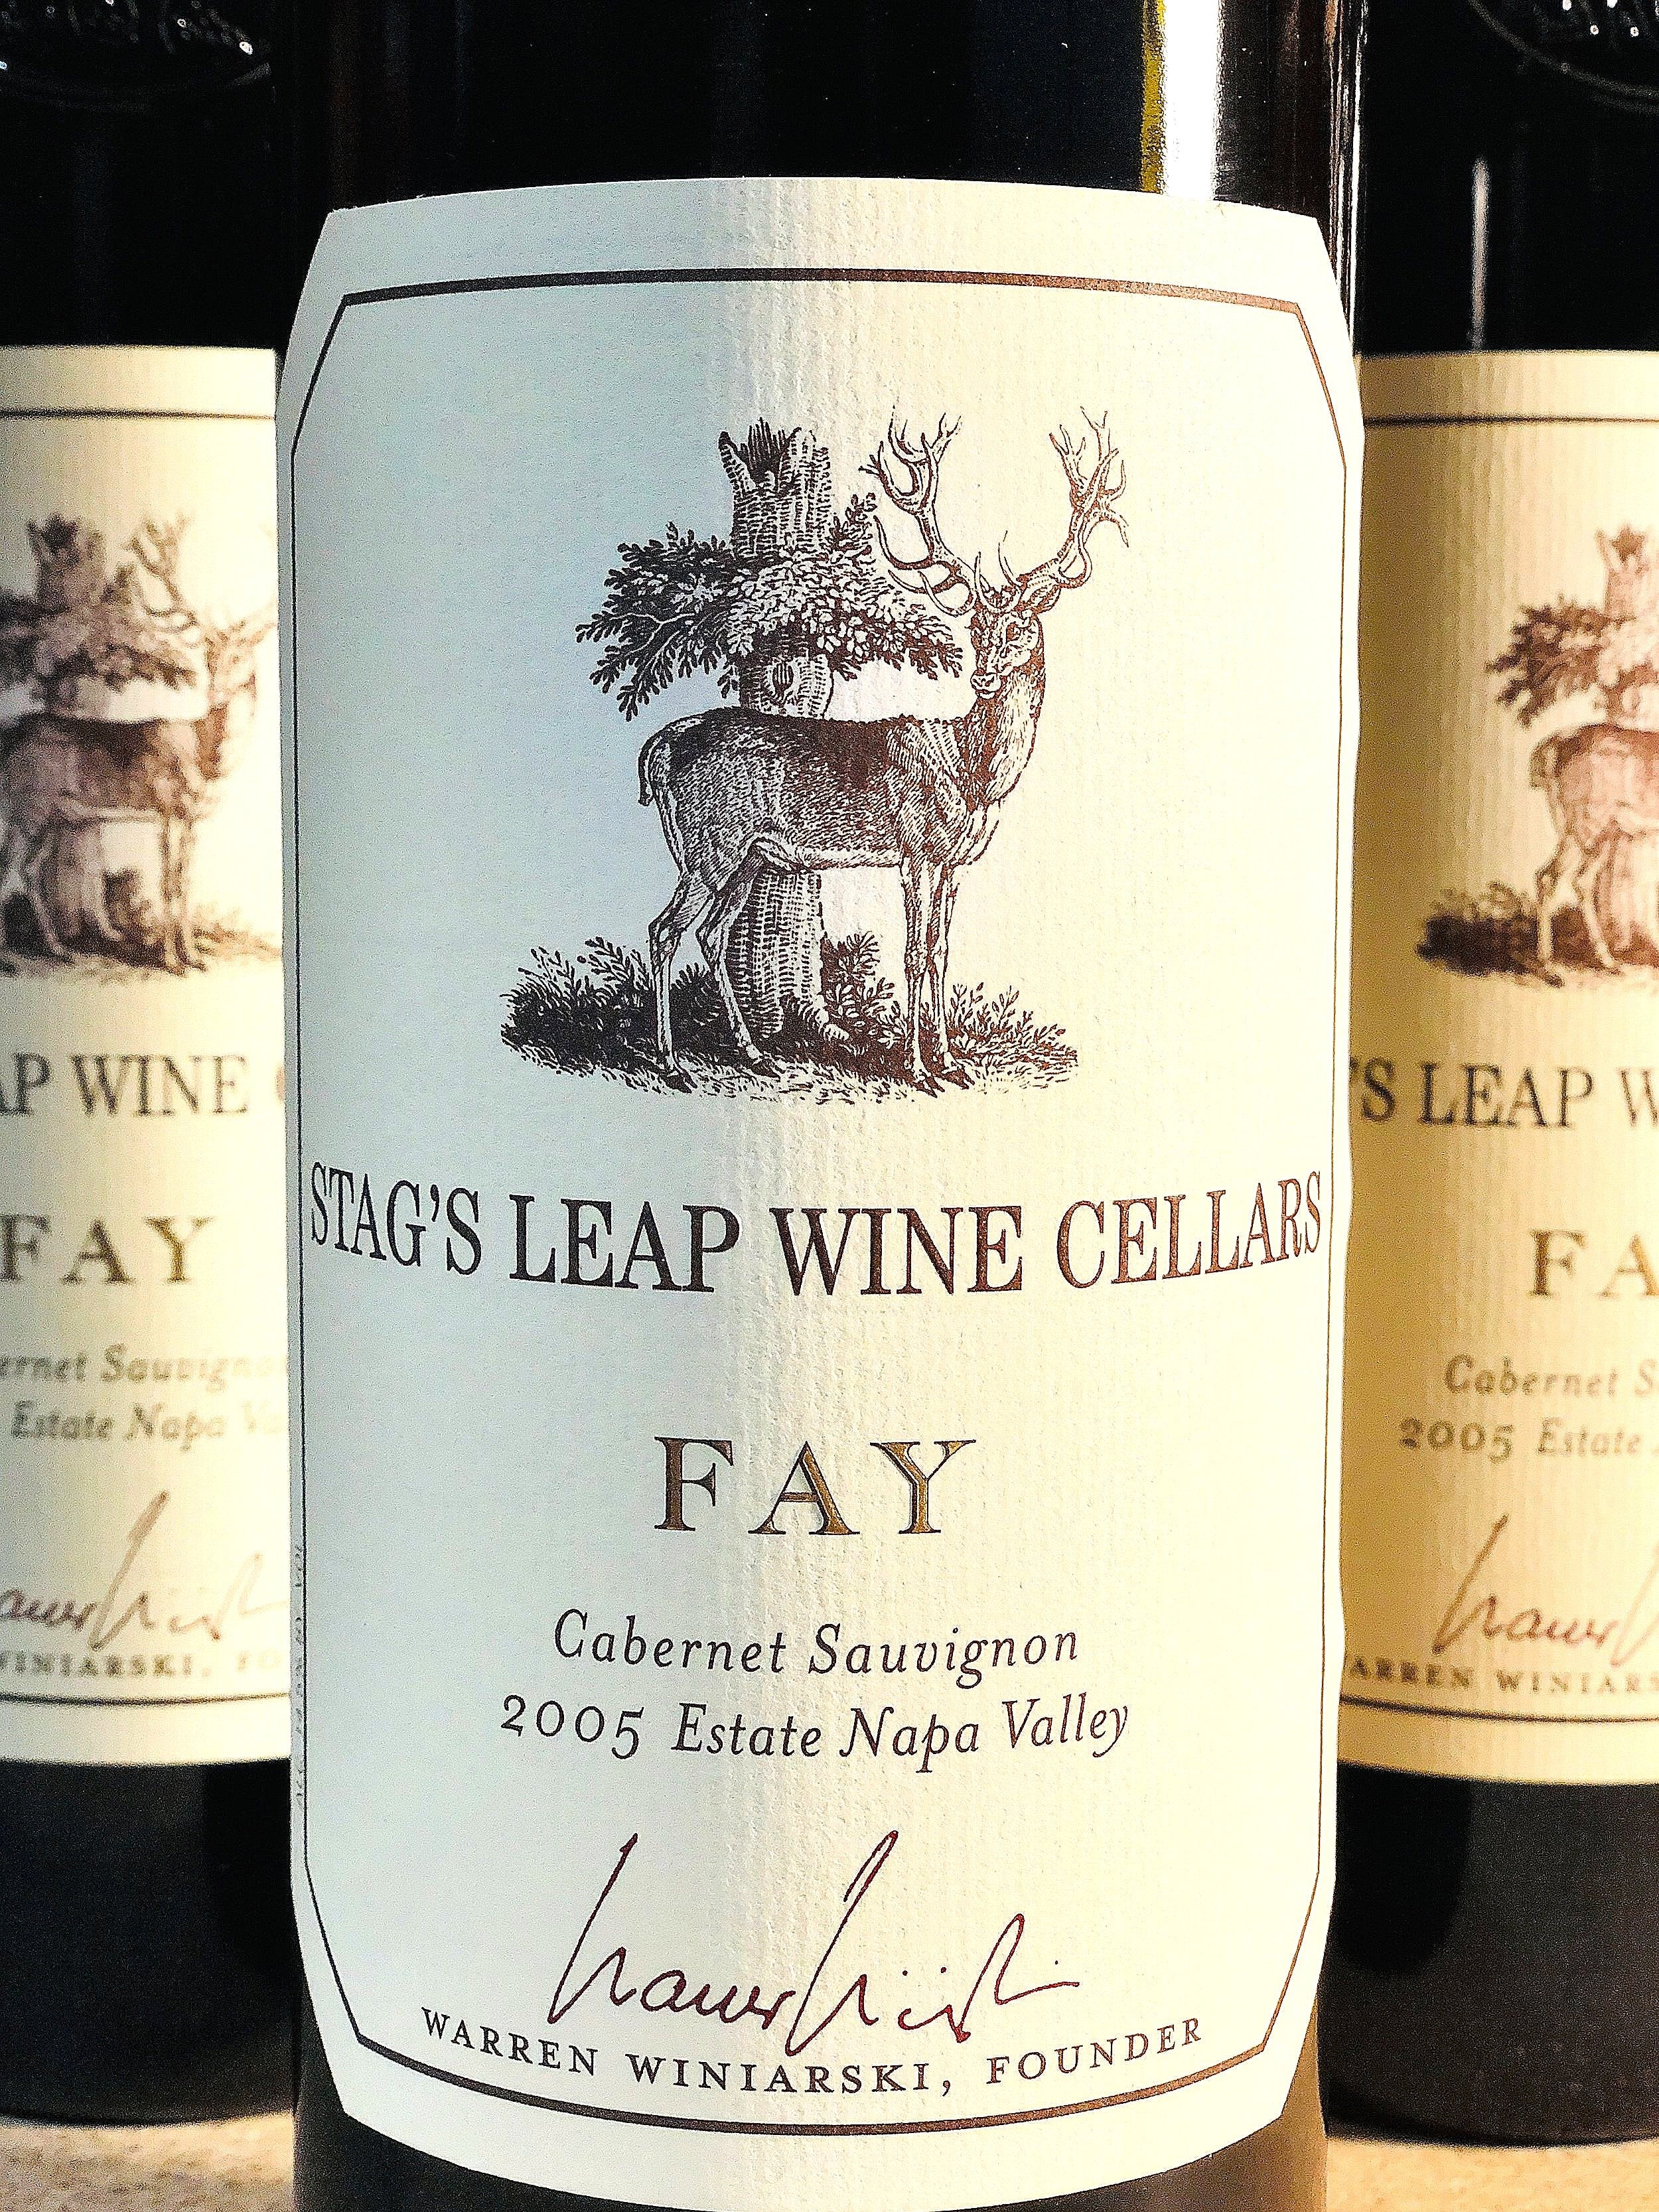 Stag's Leap Wine Cellars, Napa Valley, Fay Vineyard, Cabernet Sauvignon 2005